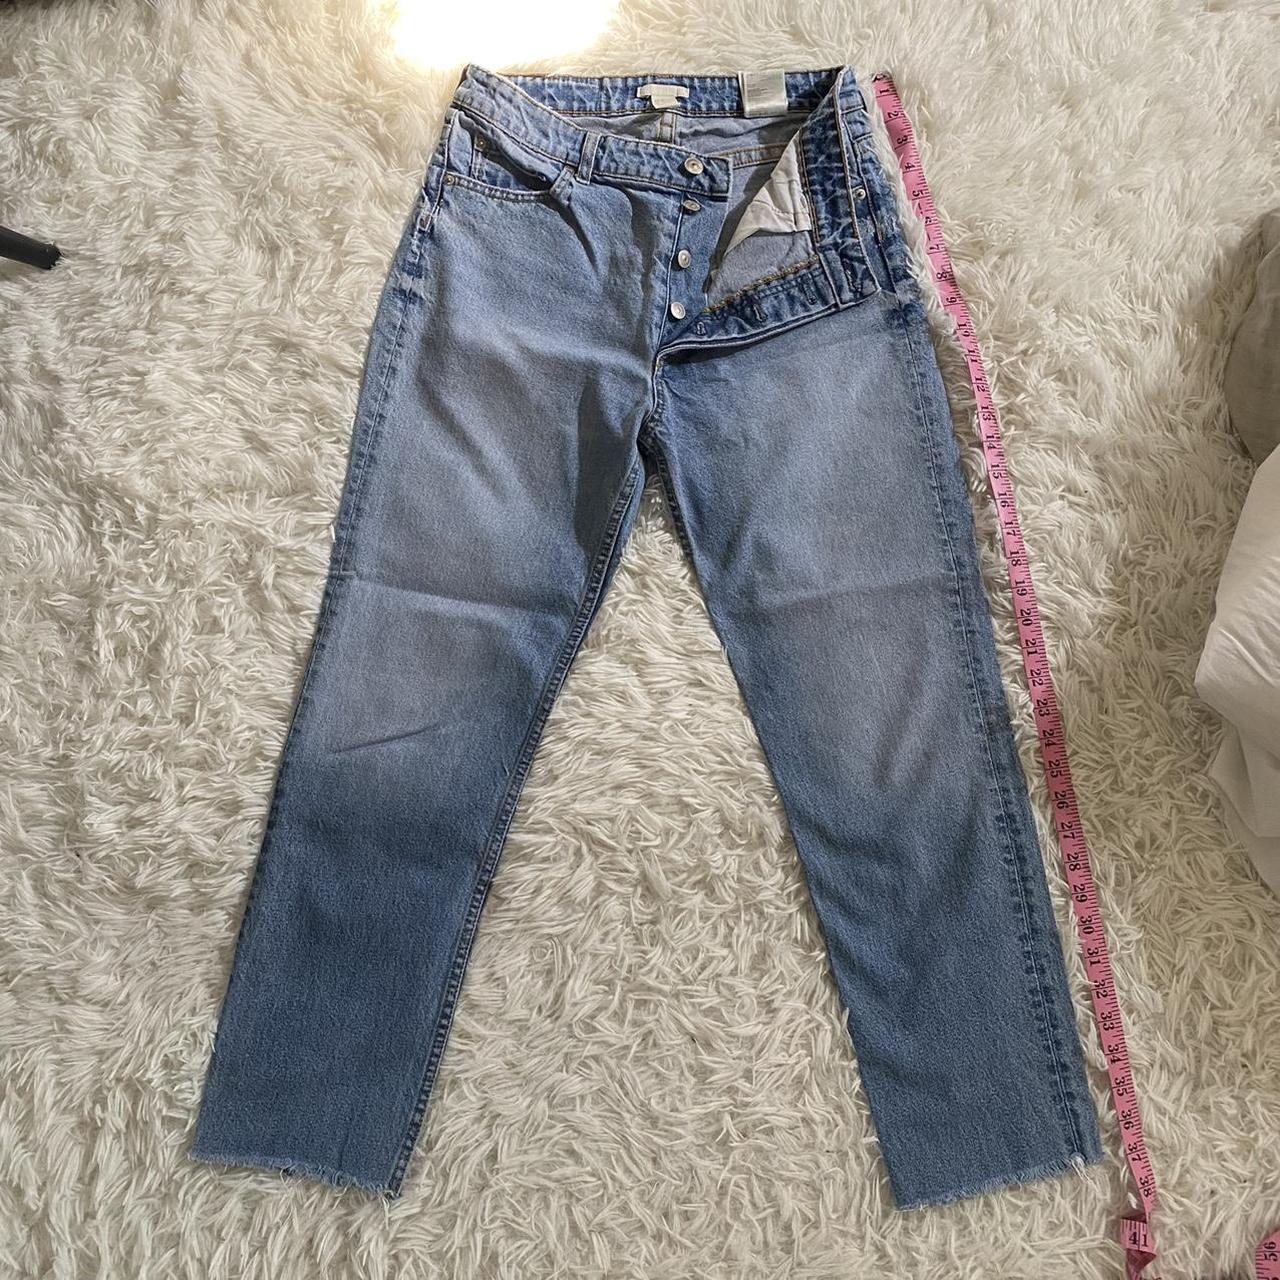 Vintage Levi Lookalike Jeans was so happy to find... - Depop